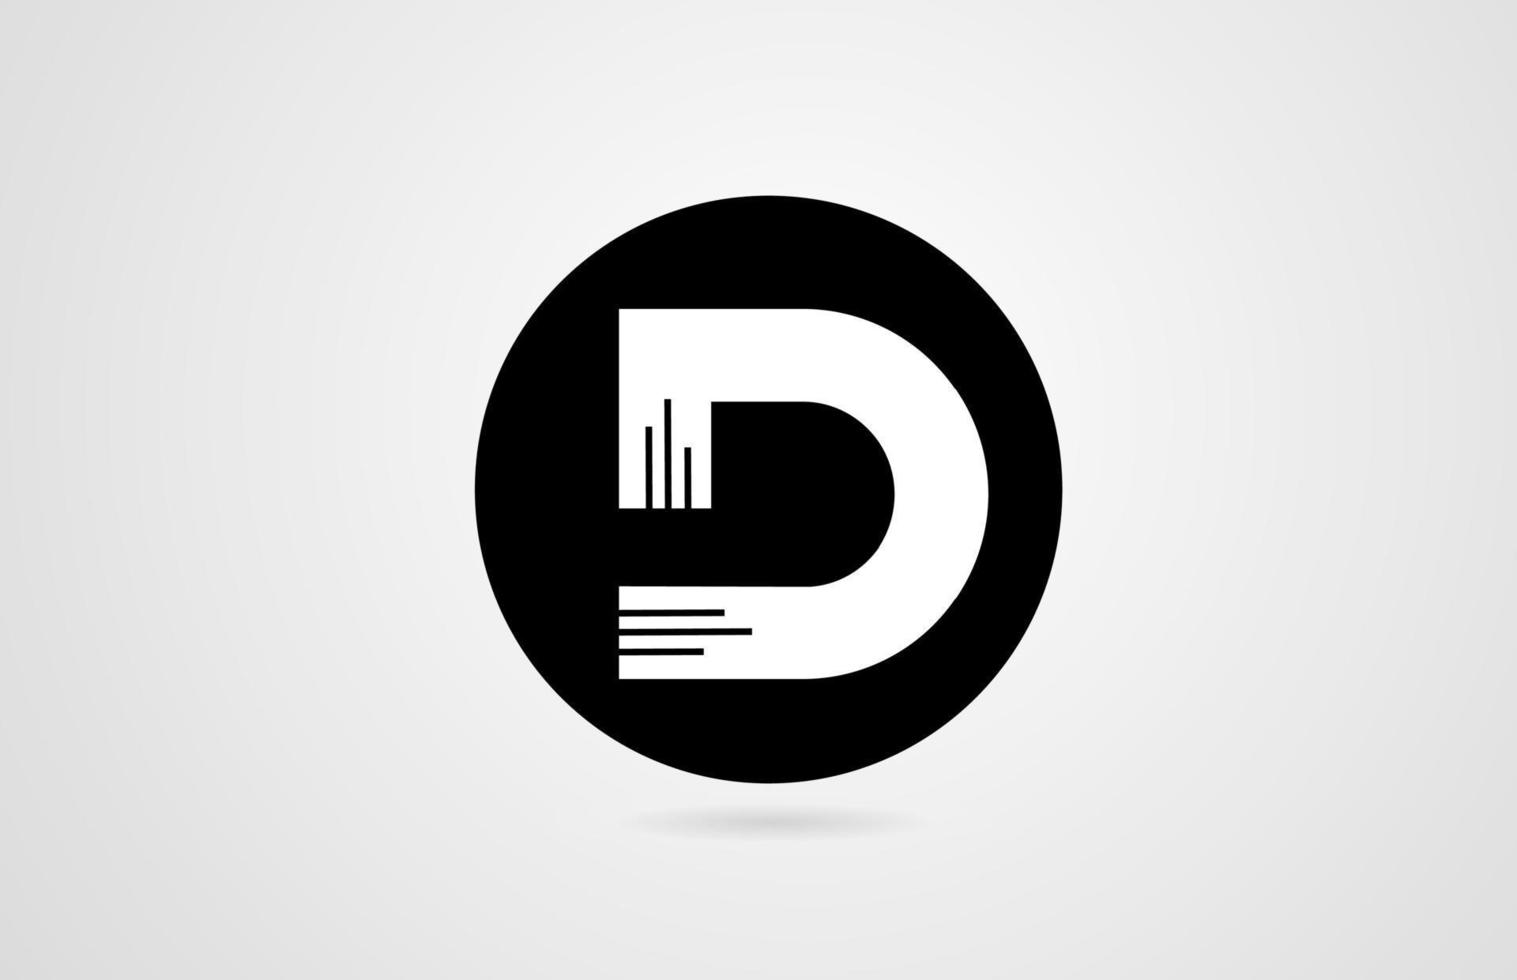 d letra do alfabeto branco círculo preto empresa logotipo ícone design corporativo vetor